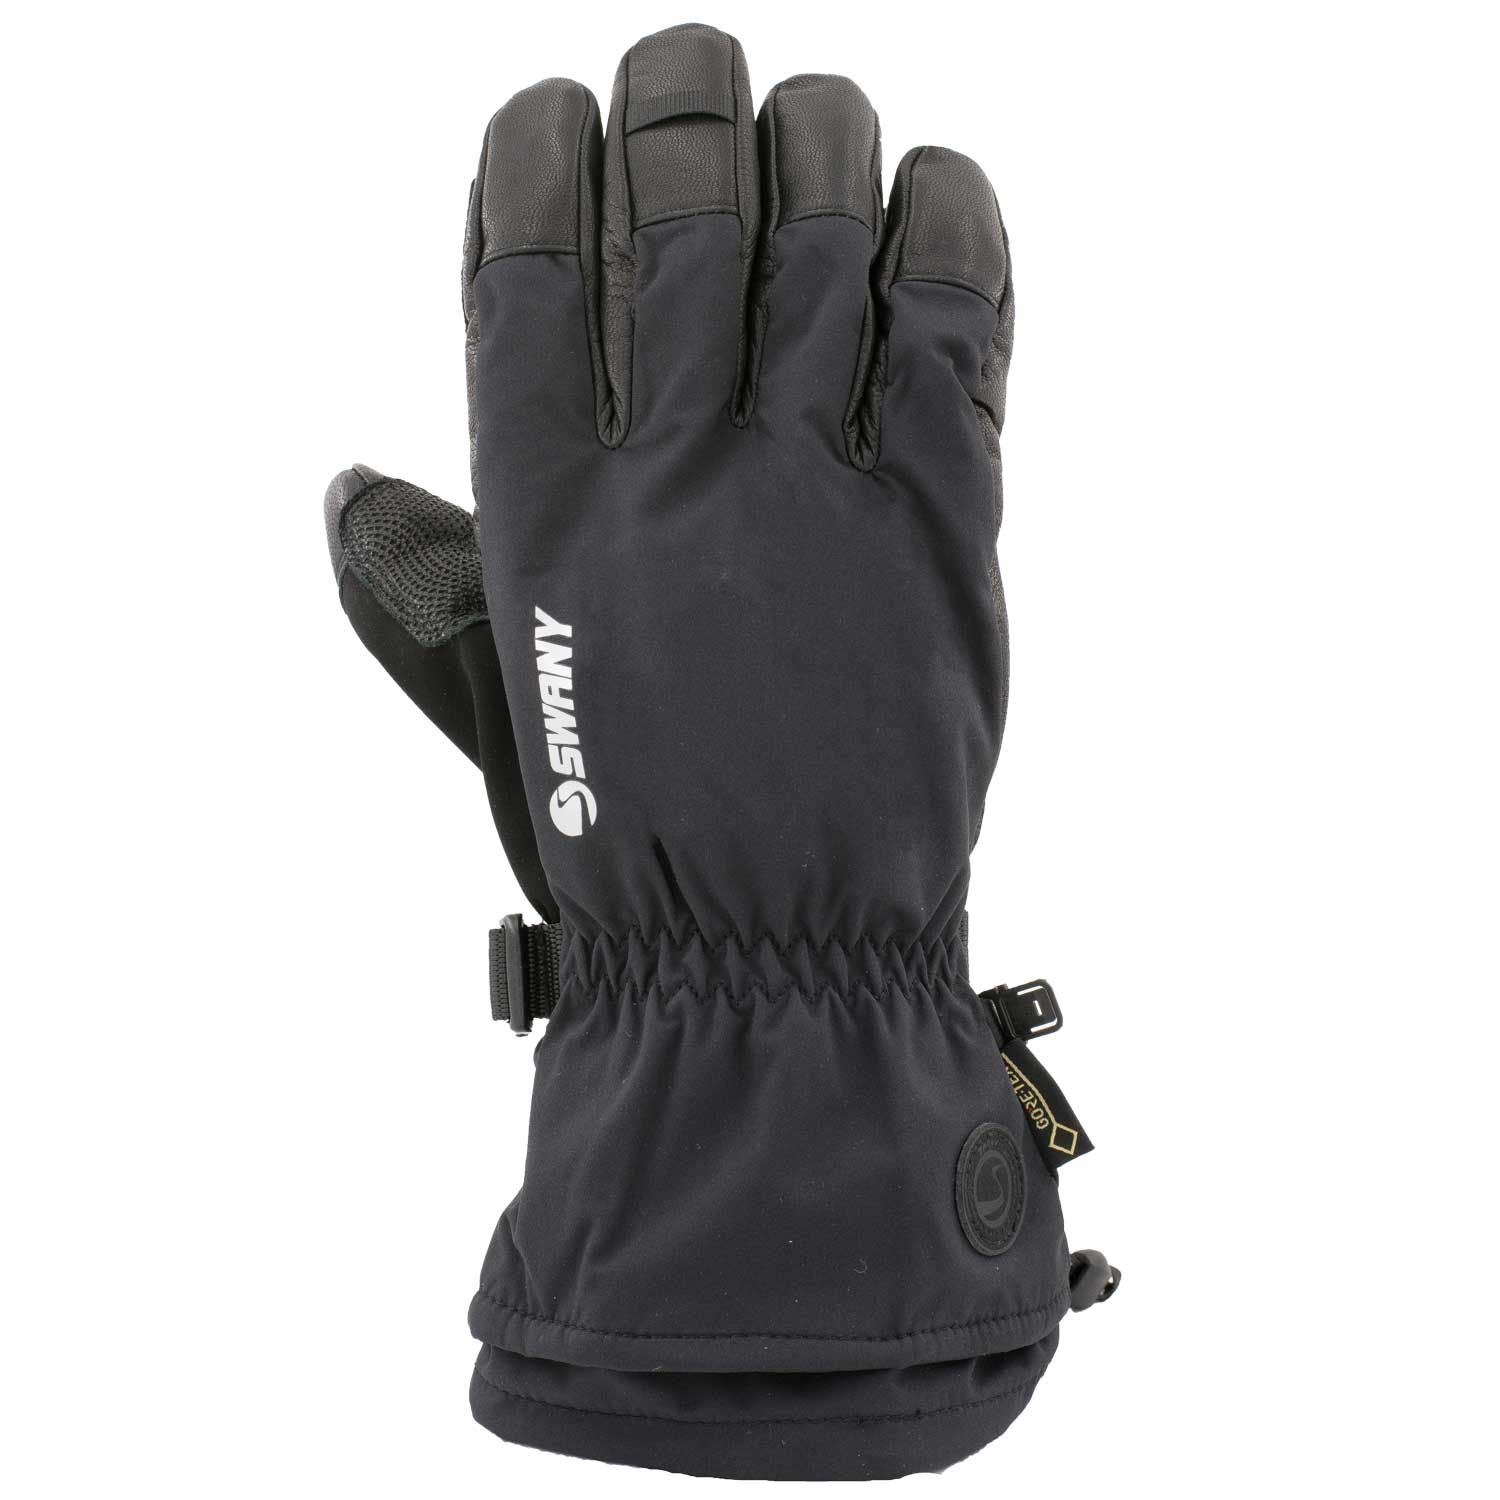 Swany 970 Glove-Men's